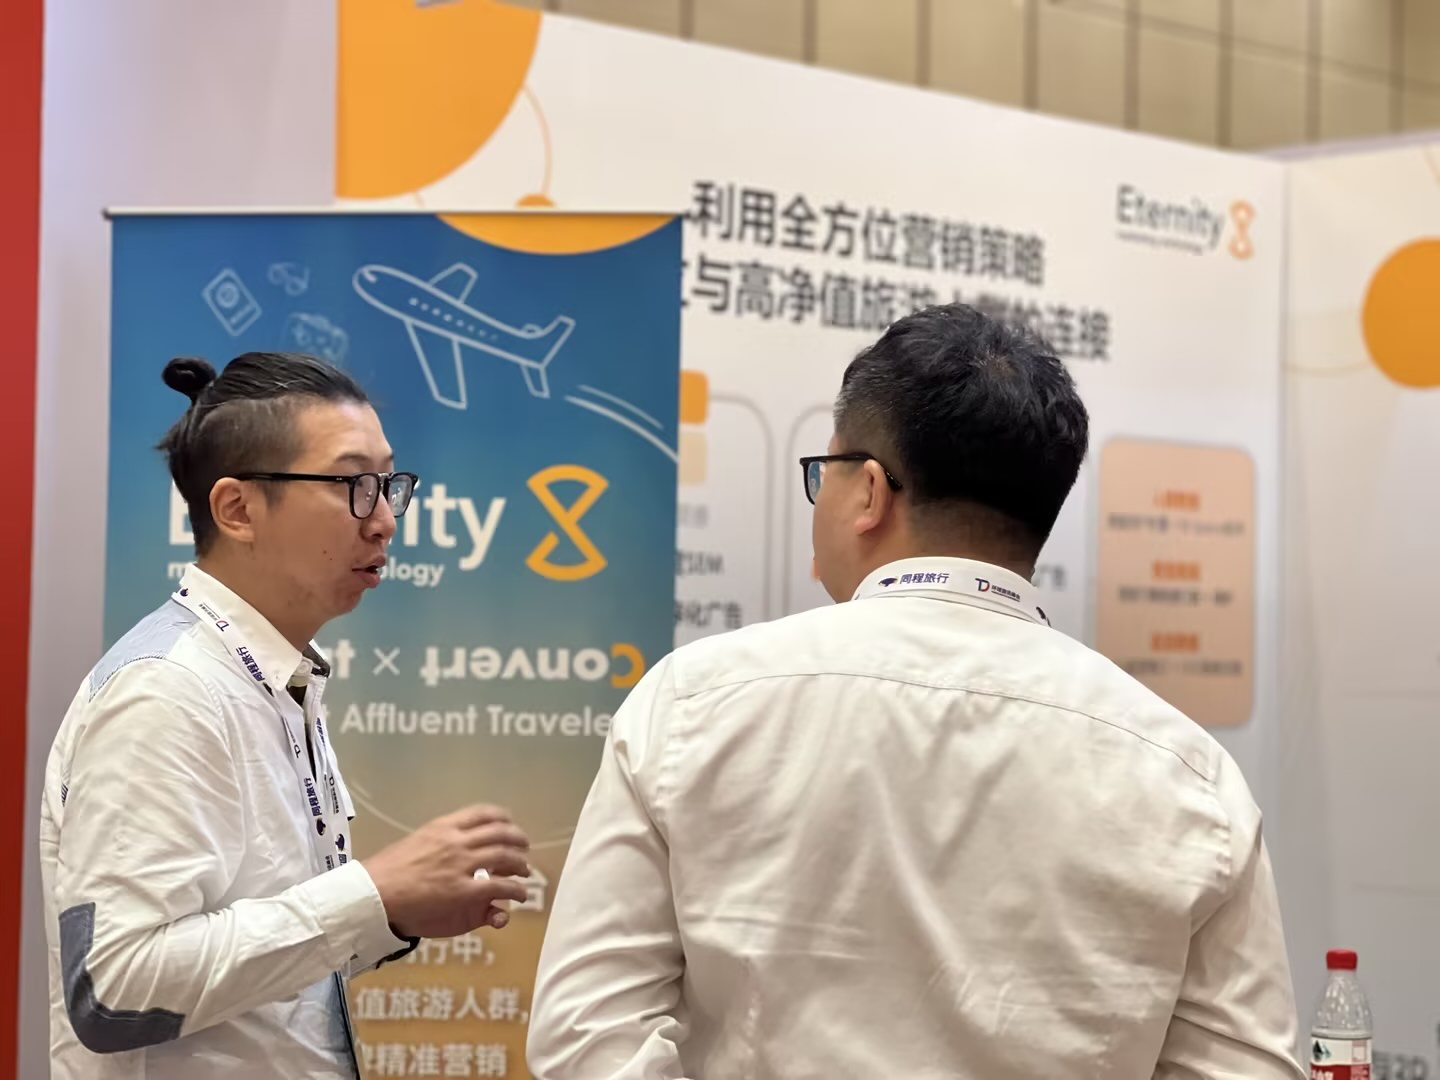 Xiaohongshu workshop attendees raised questions regarding EternityX's Xiaohongshu Solutions